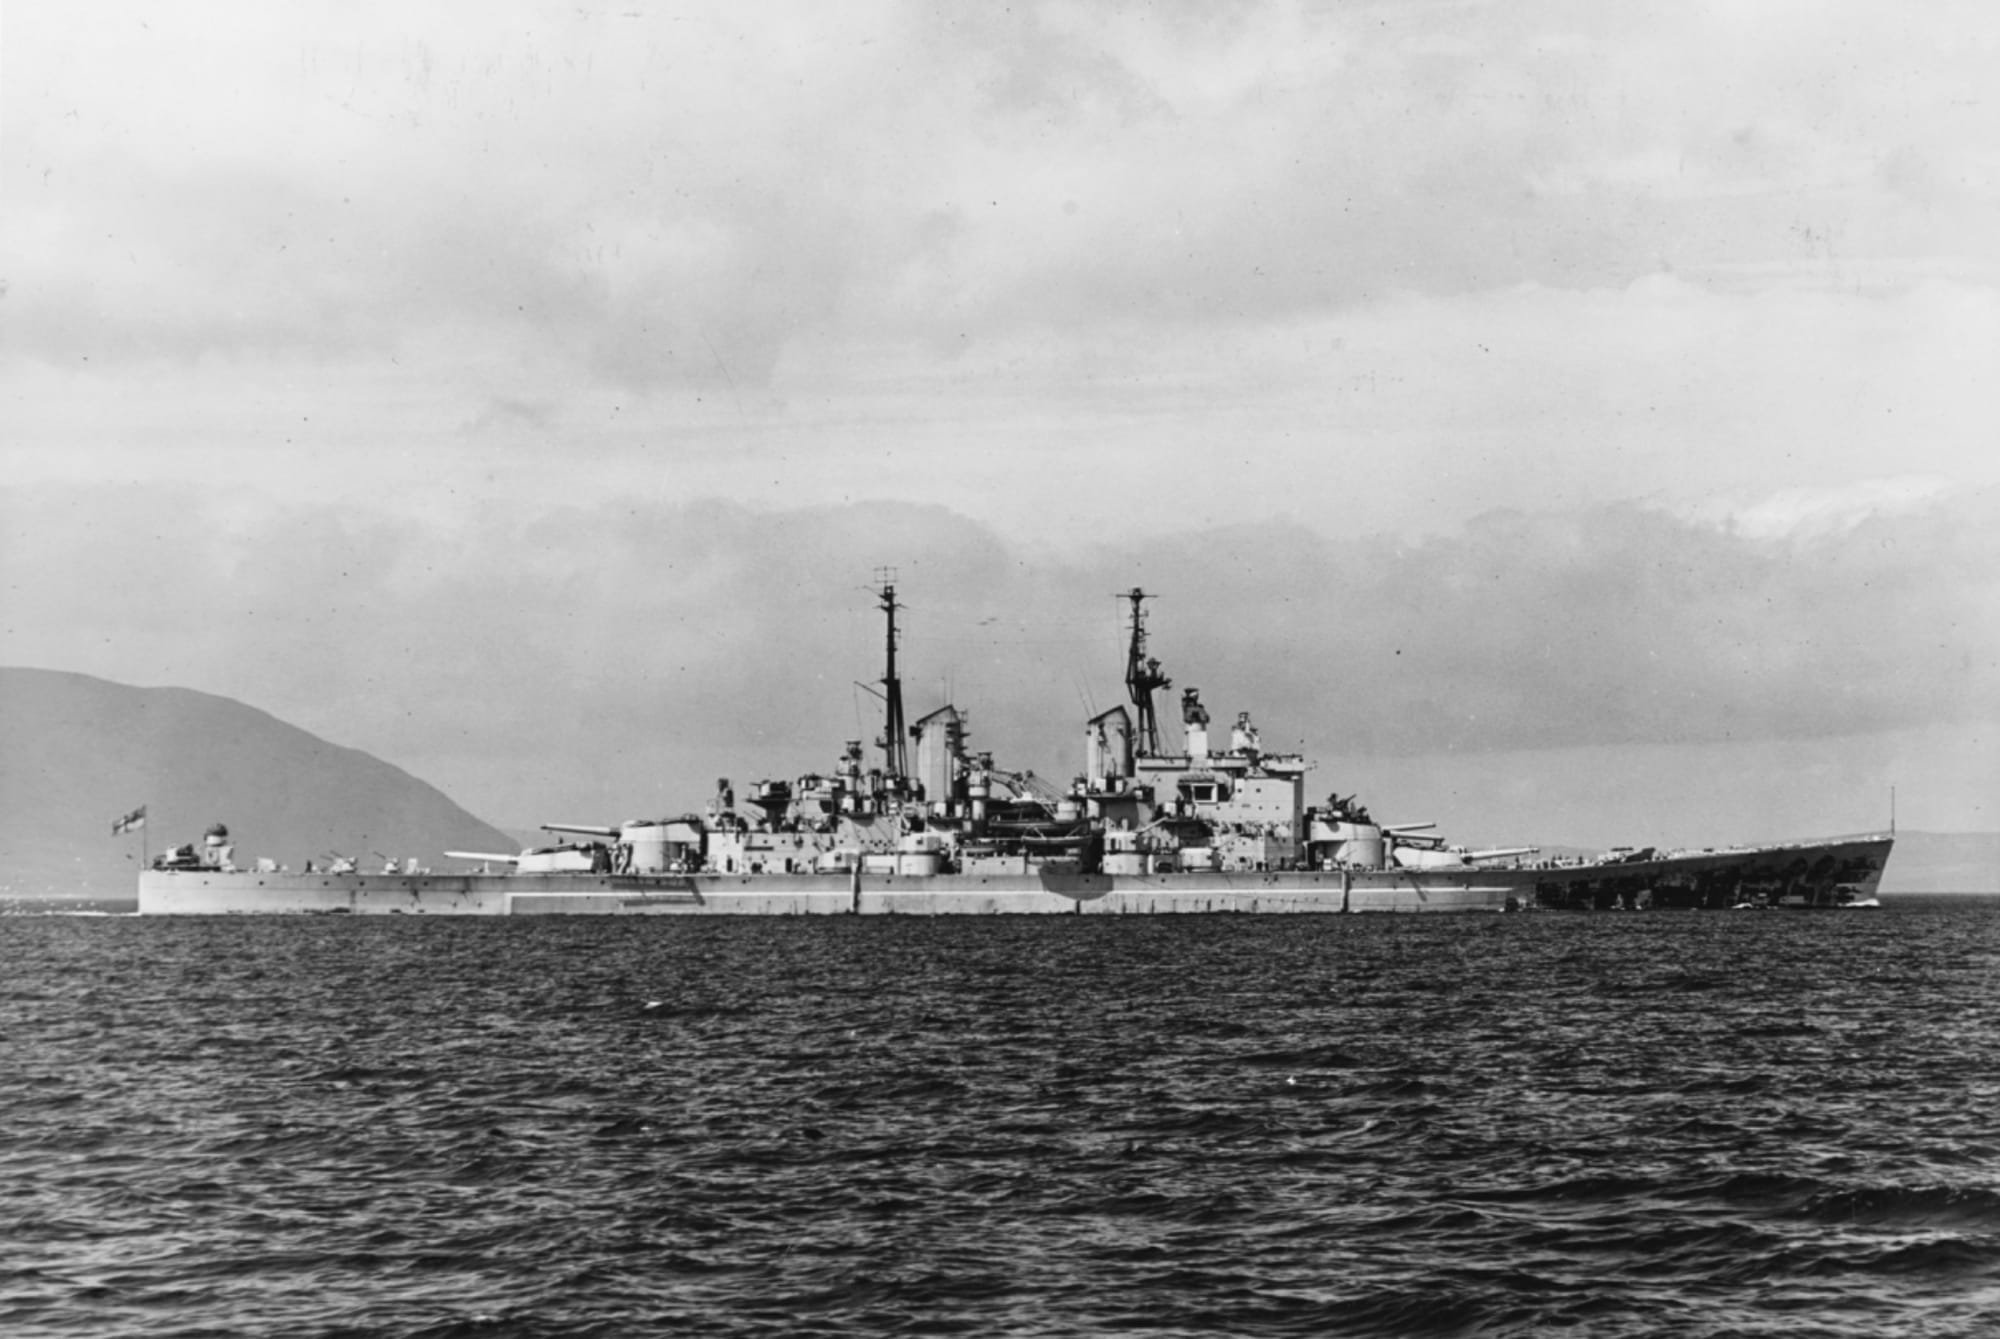 The HMS Vanguard